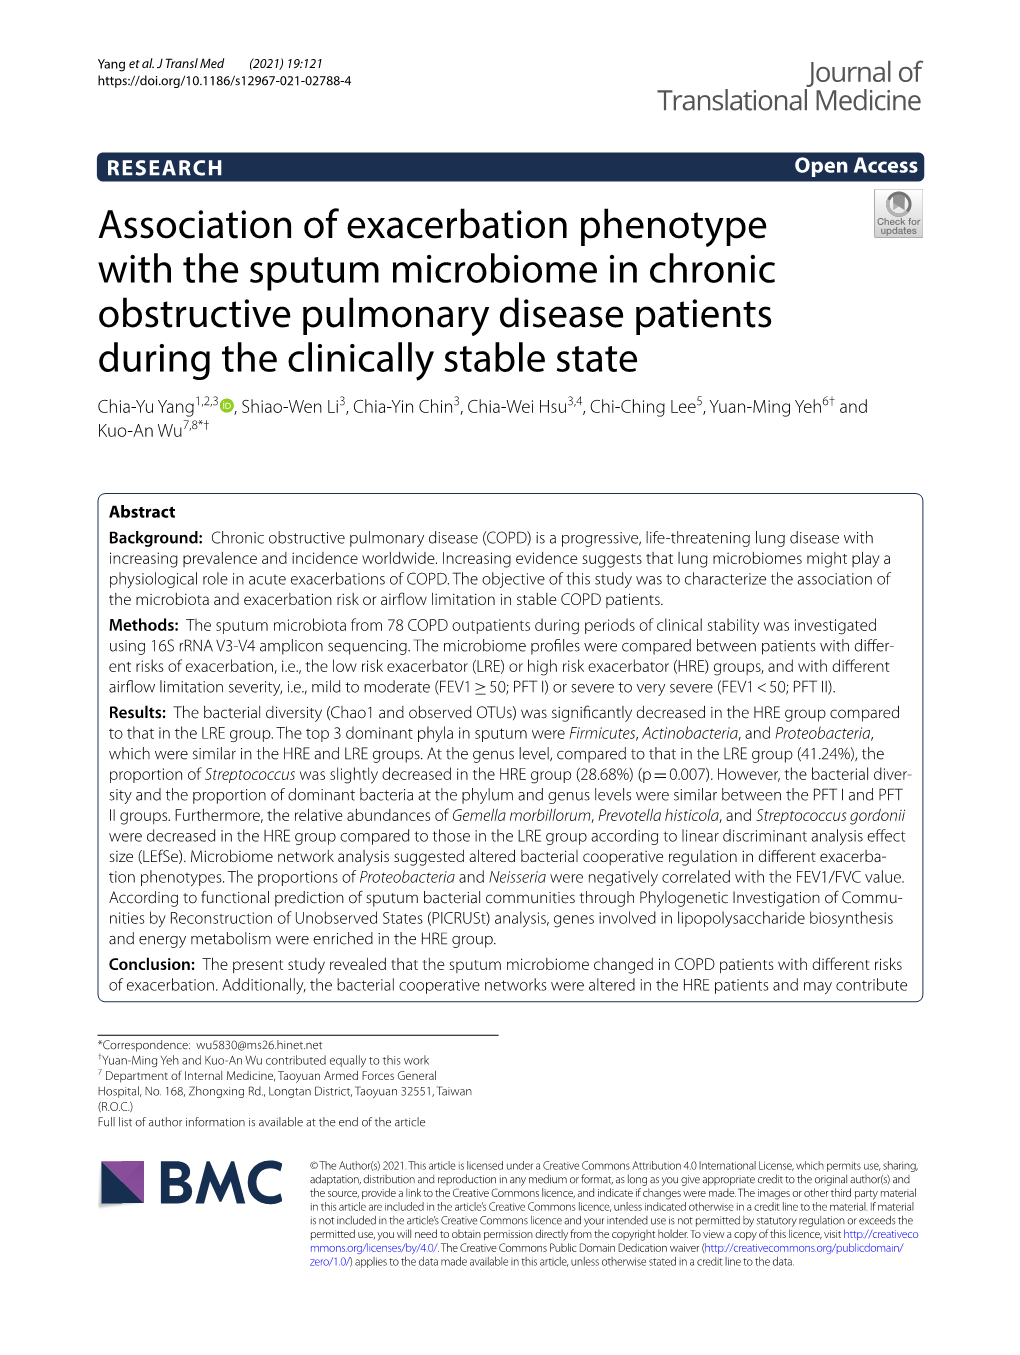 Association of Exacerbation Phenotype with the Sputum